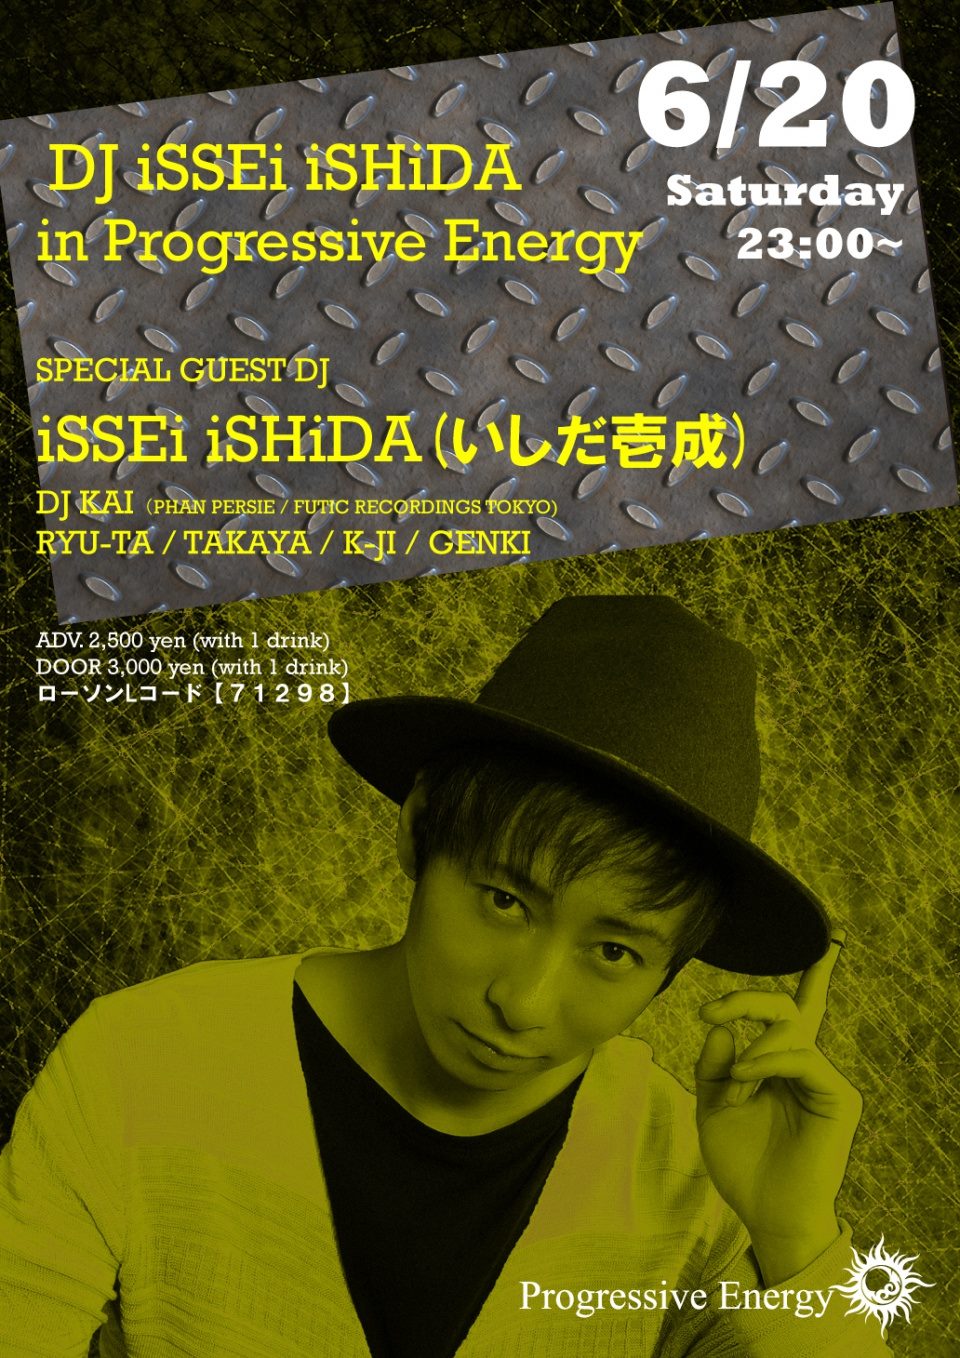 2015.6.20 SAT – KAI : DJ@Progressive Energy / DJ iSSEi iSHiDA in P.E.